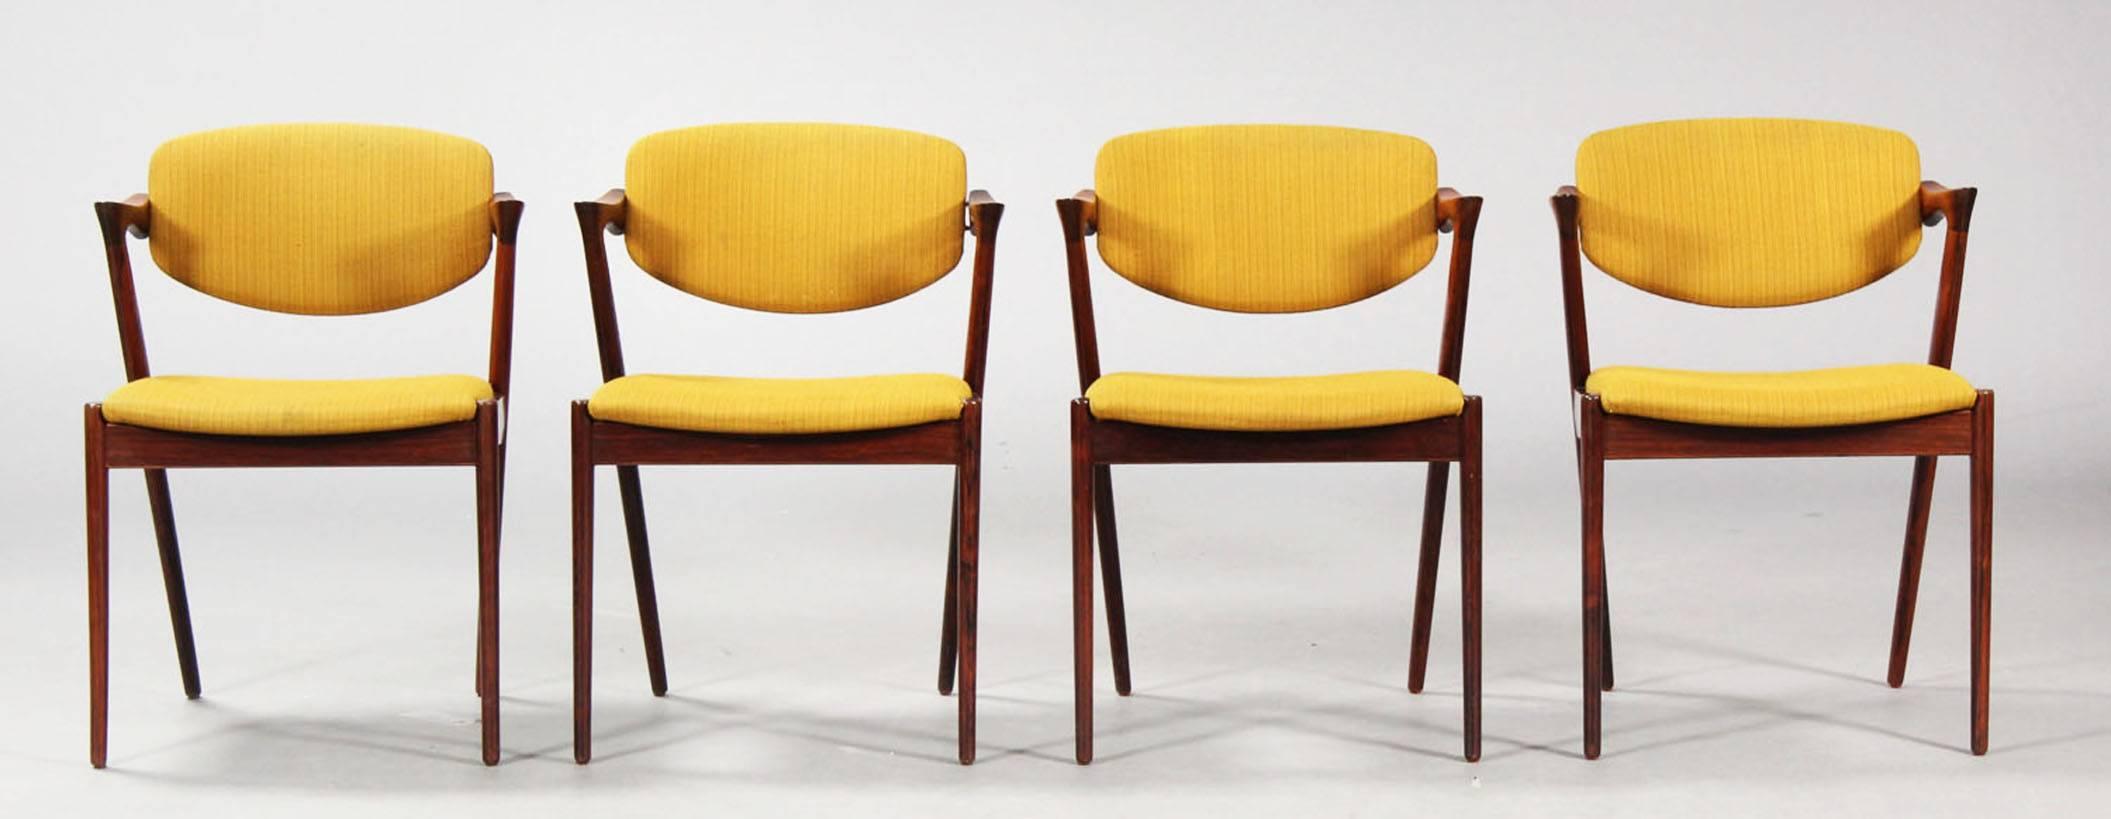 Stühle von Kai Kristiansen Modell 42 (Hartholz)